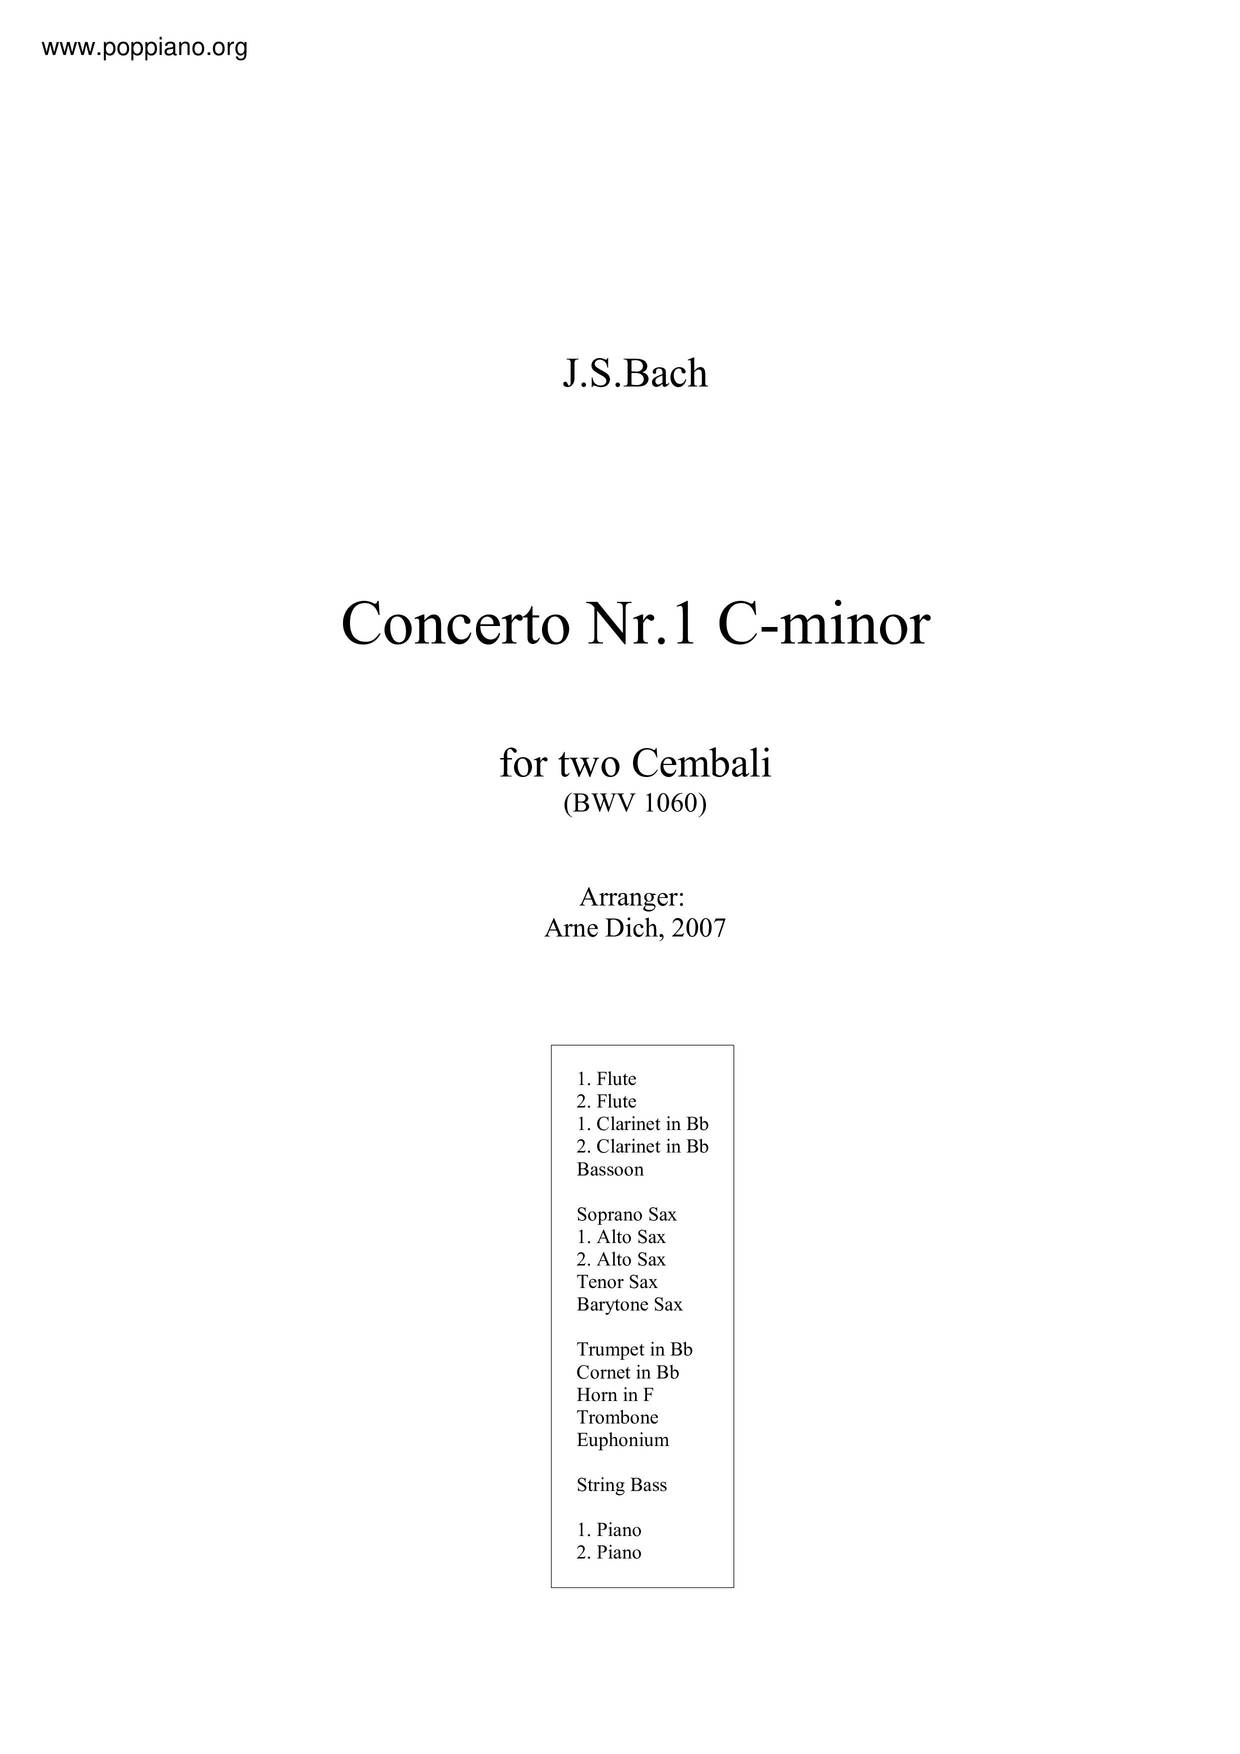 Concerto For 2 Harpsichords In C Minor, BWV 1060 Score